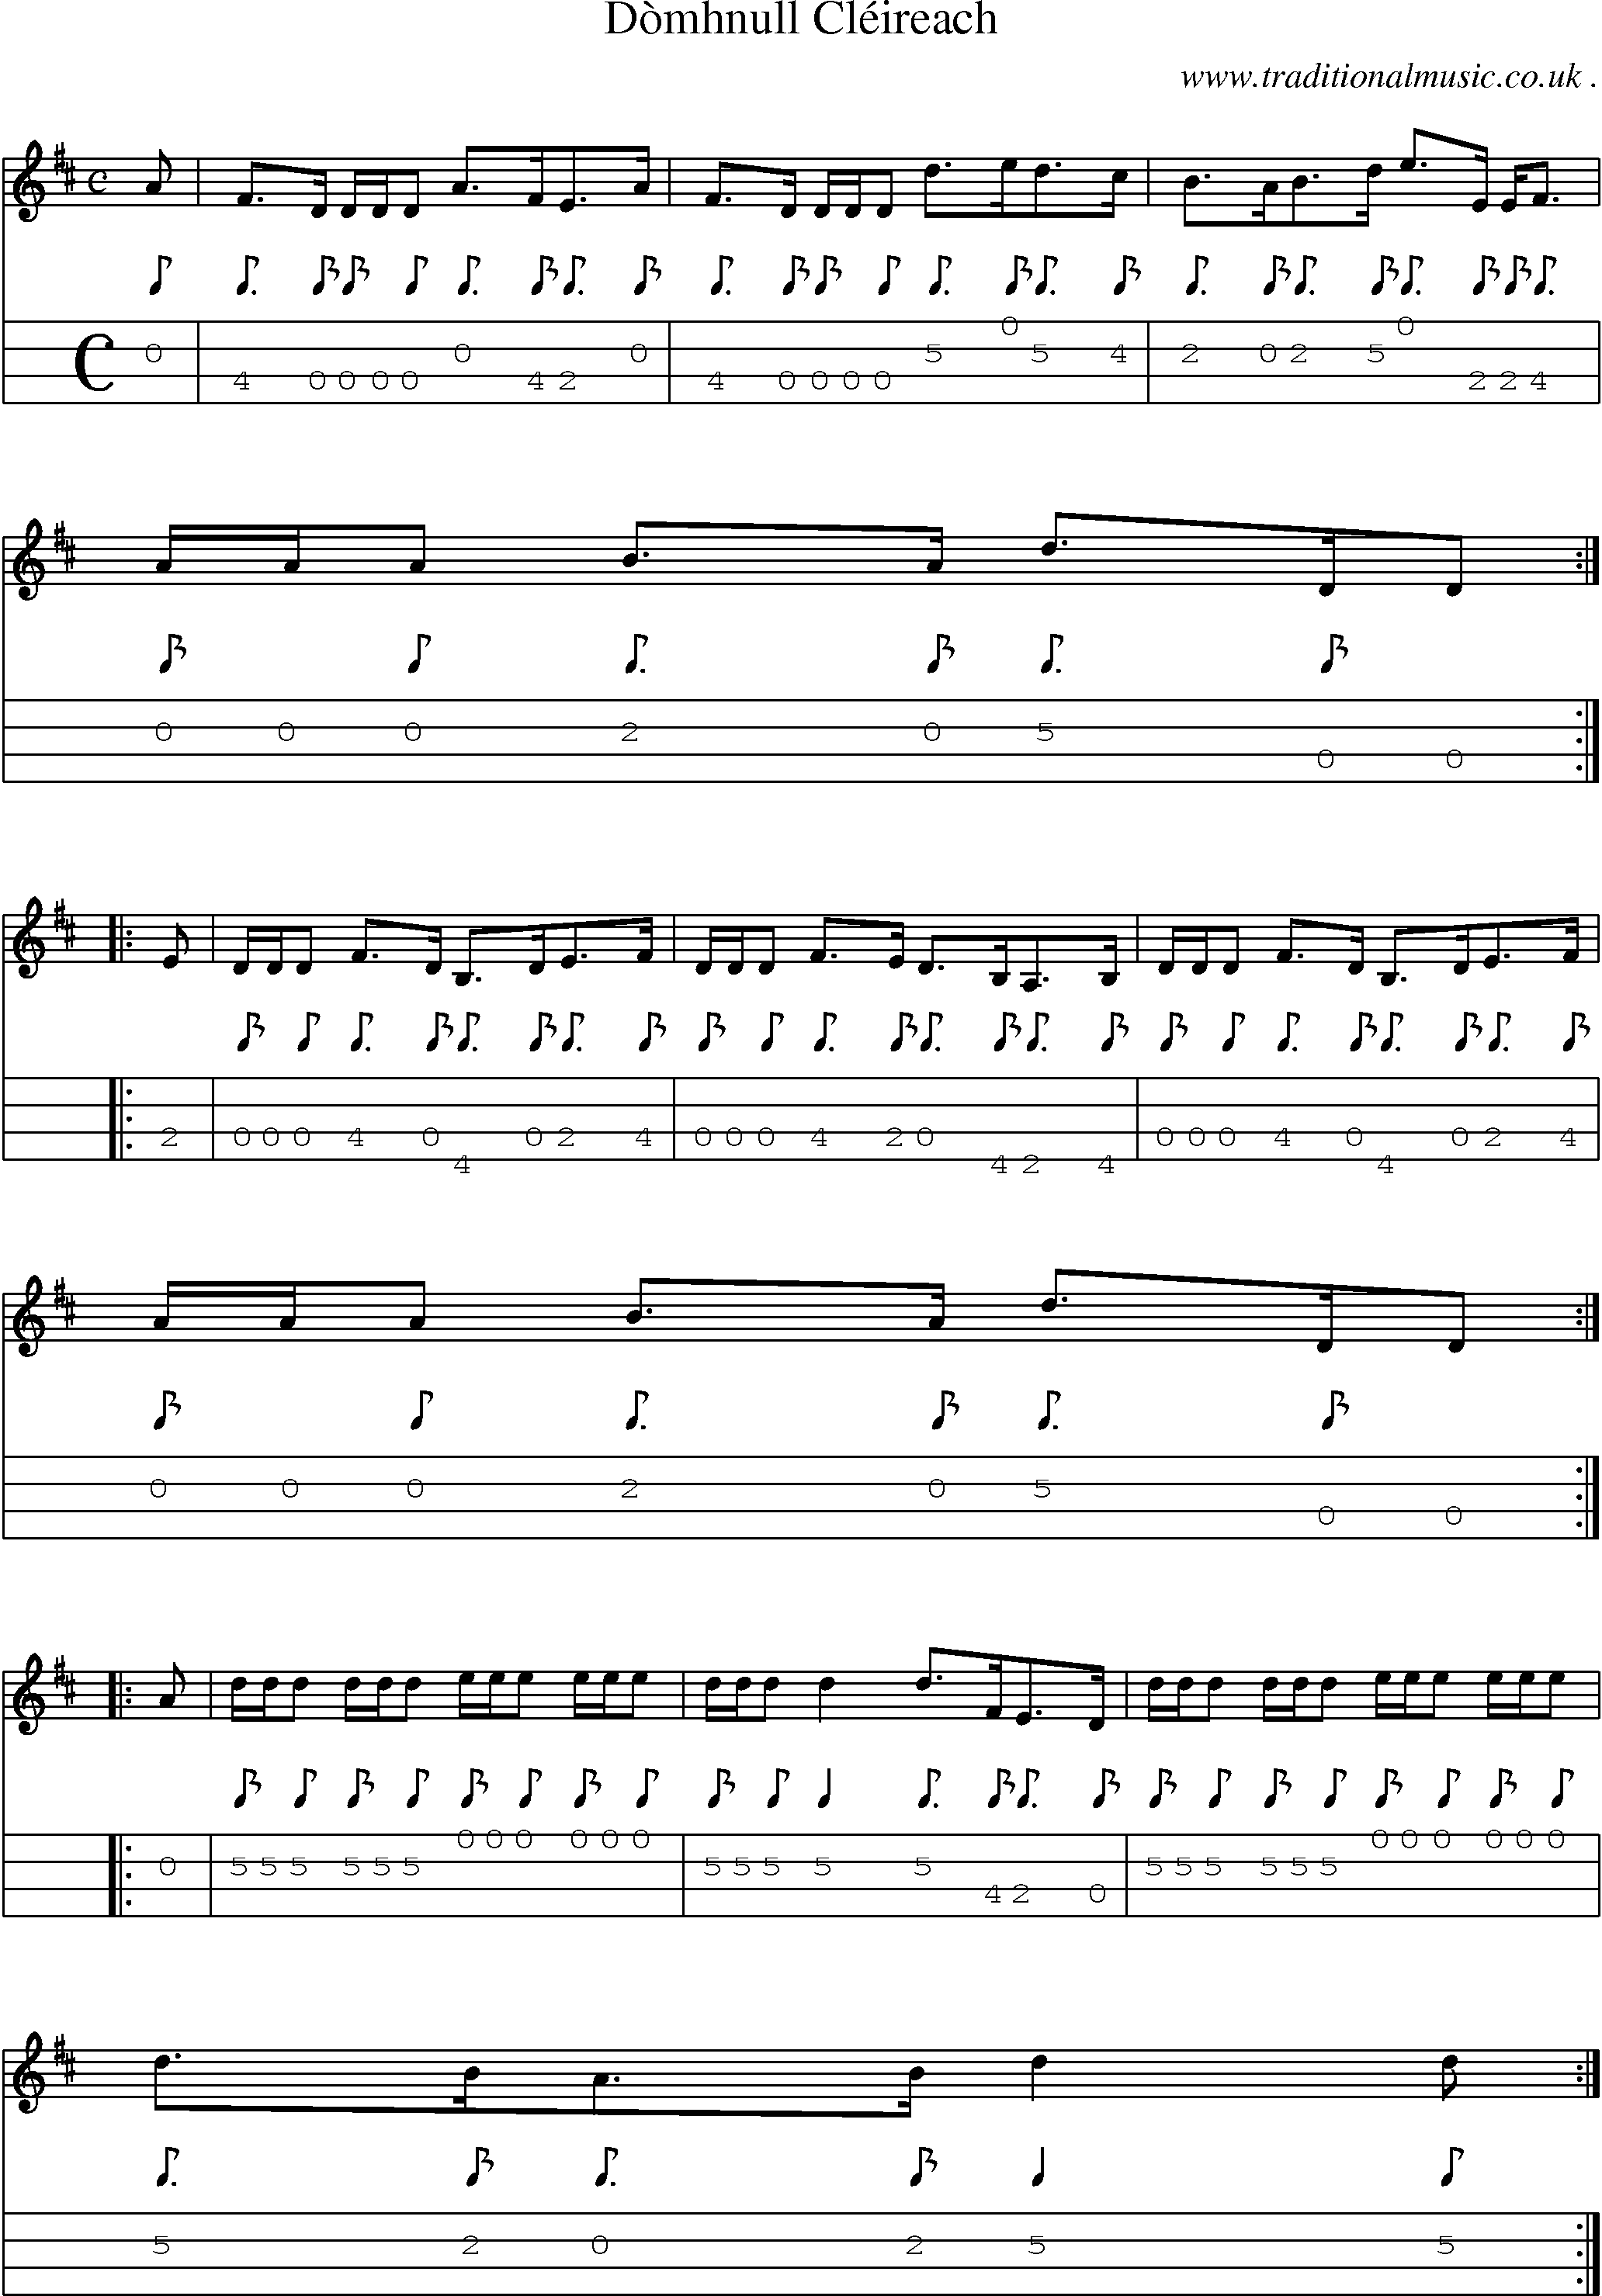 Sheet-music  score, Chords and Mandolin Tabs for Domhnull Cleireach